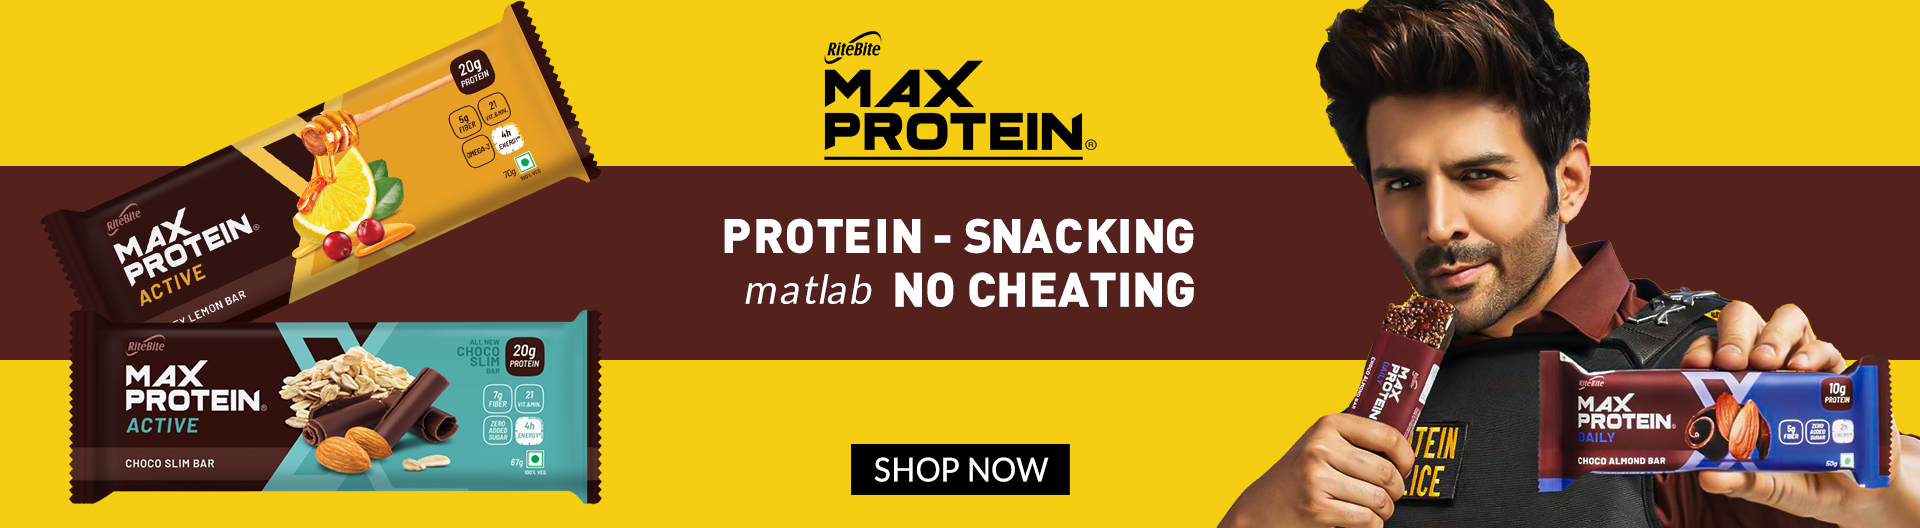 Max Protein Banner